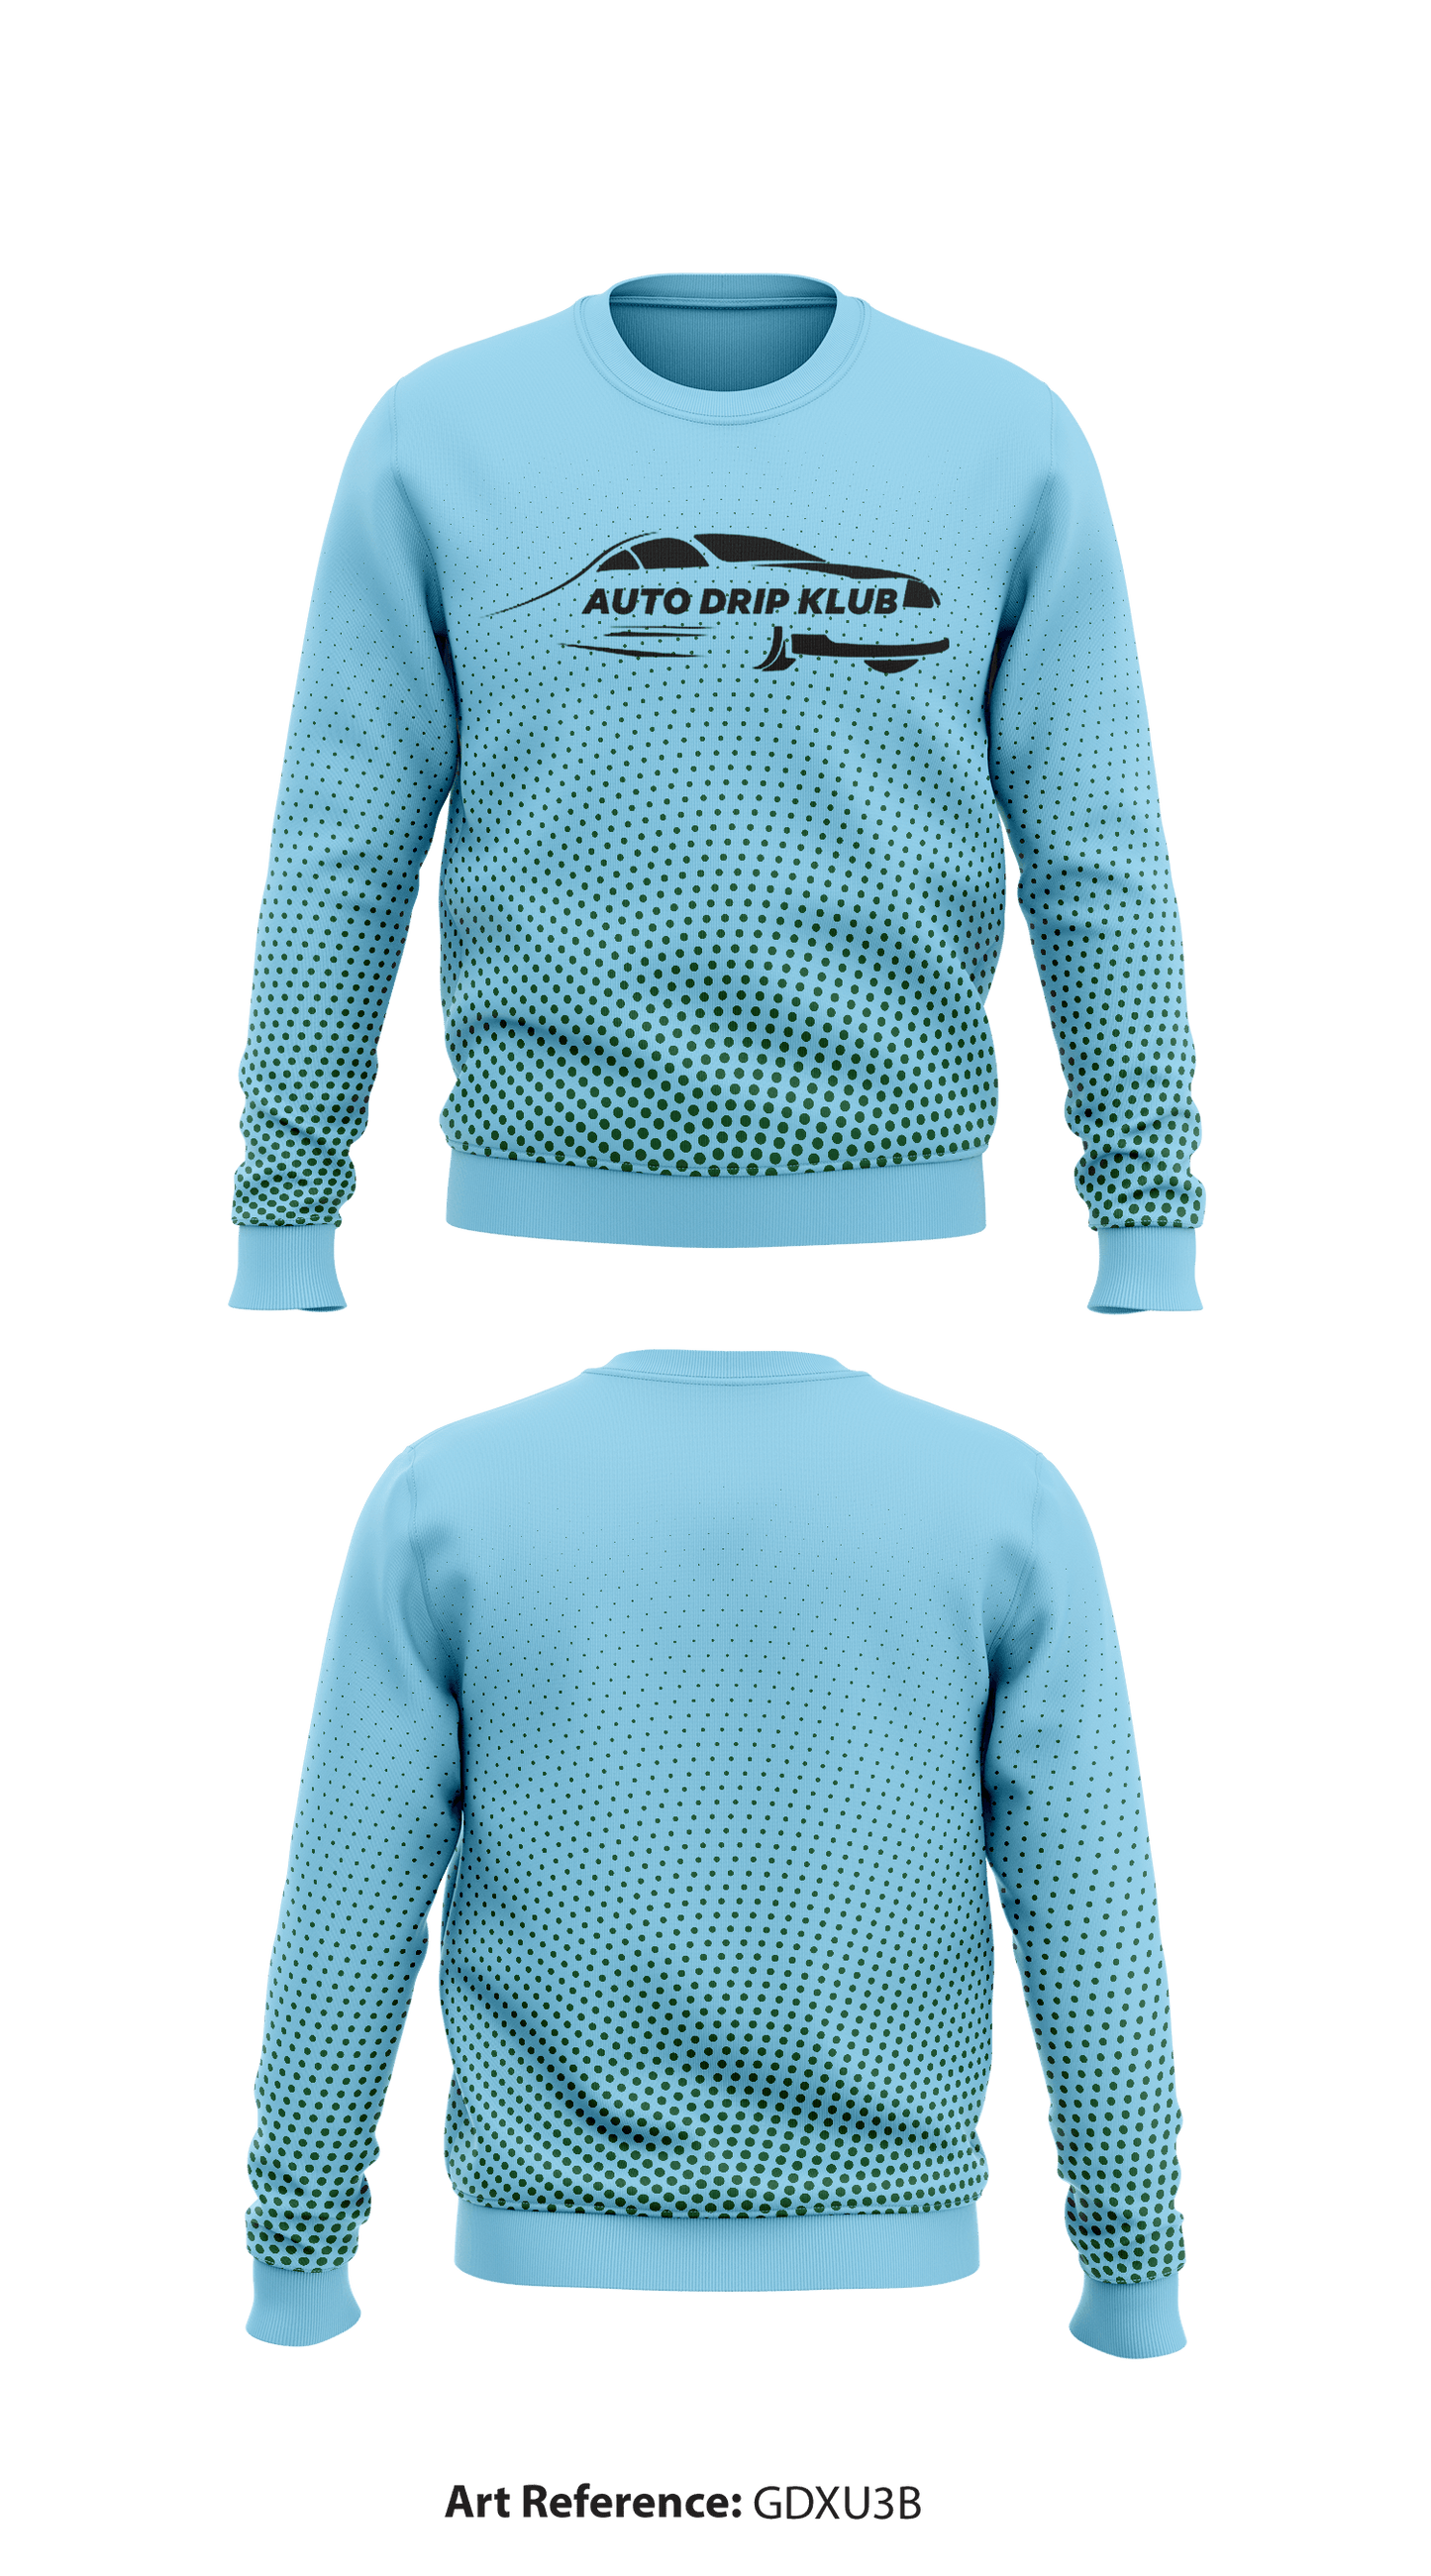 Auto Drip Klub Core Men's Crewneck Performance Sweatshirt - gdxU3B